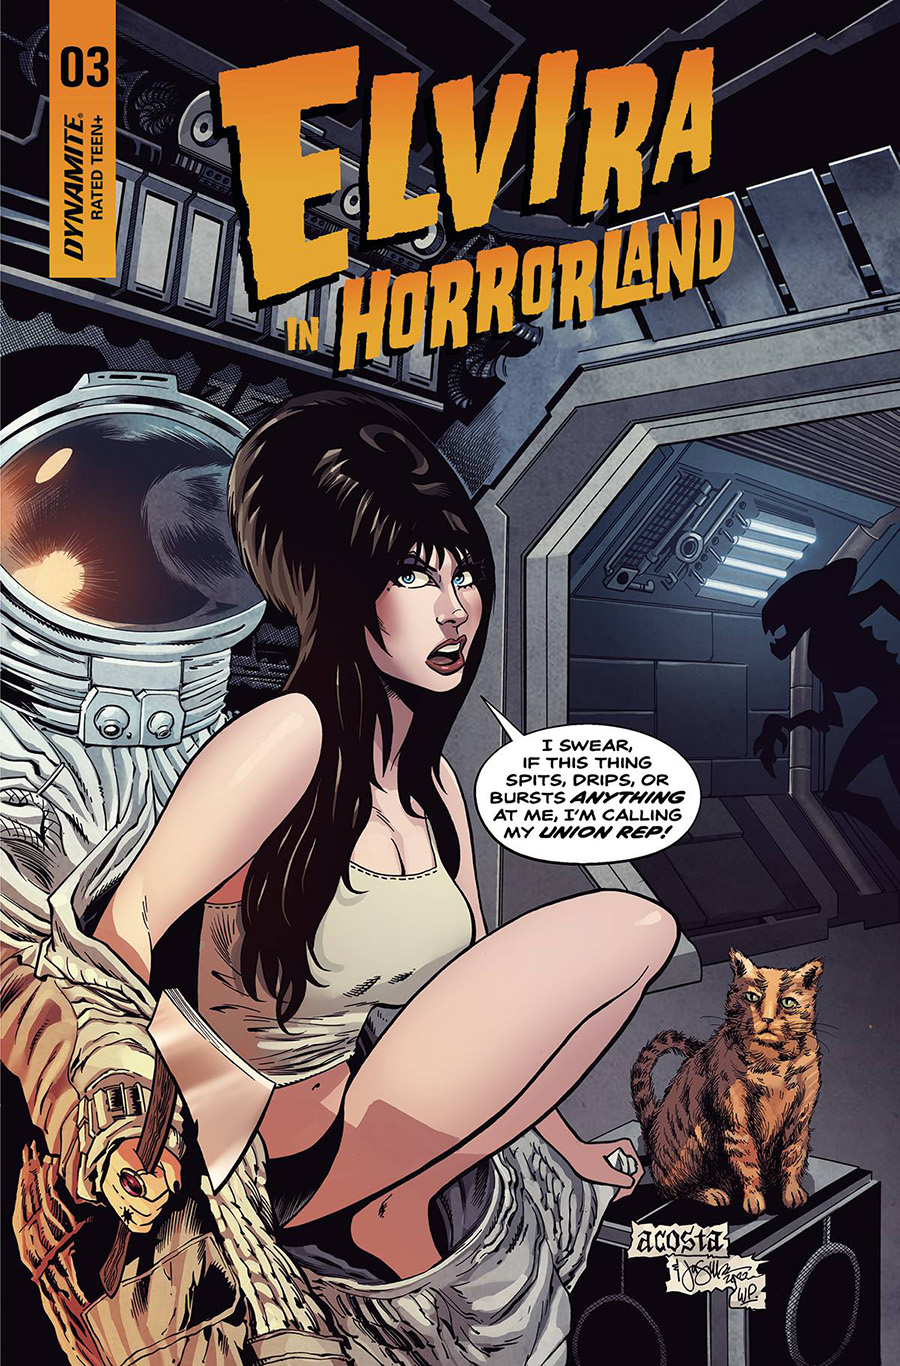 Elvira In Horrorland #3 Cover A Regular Dave Acosta Cover